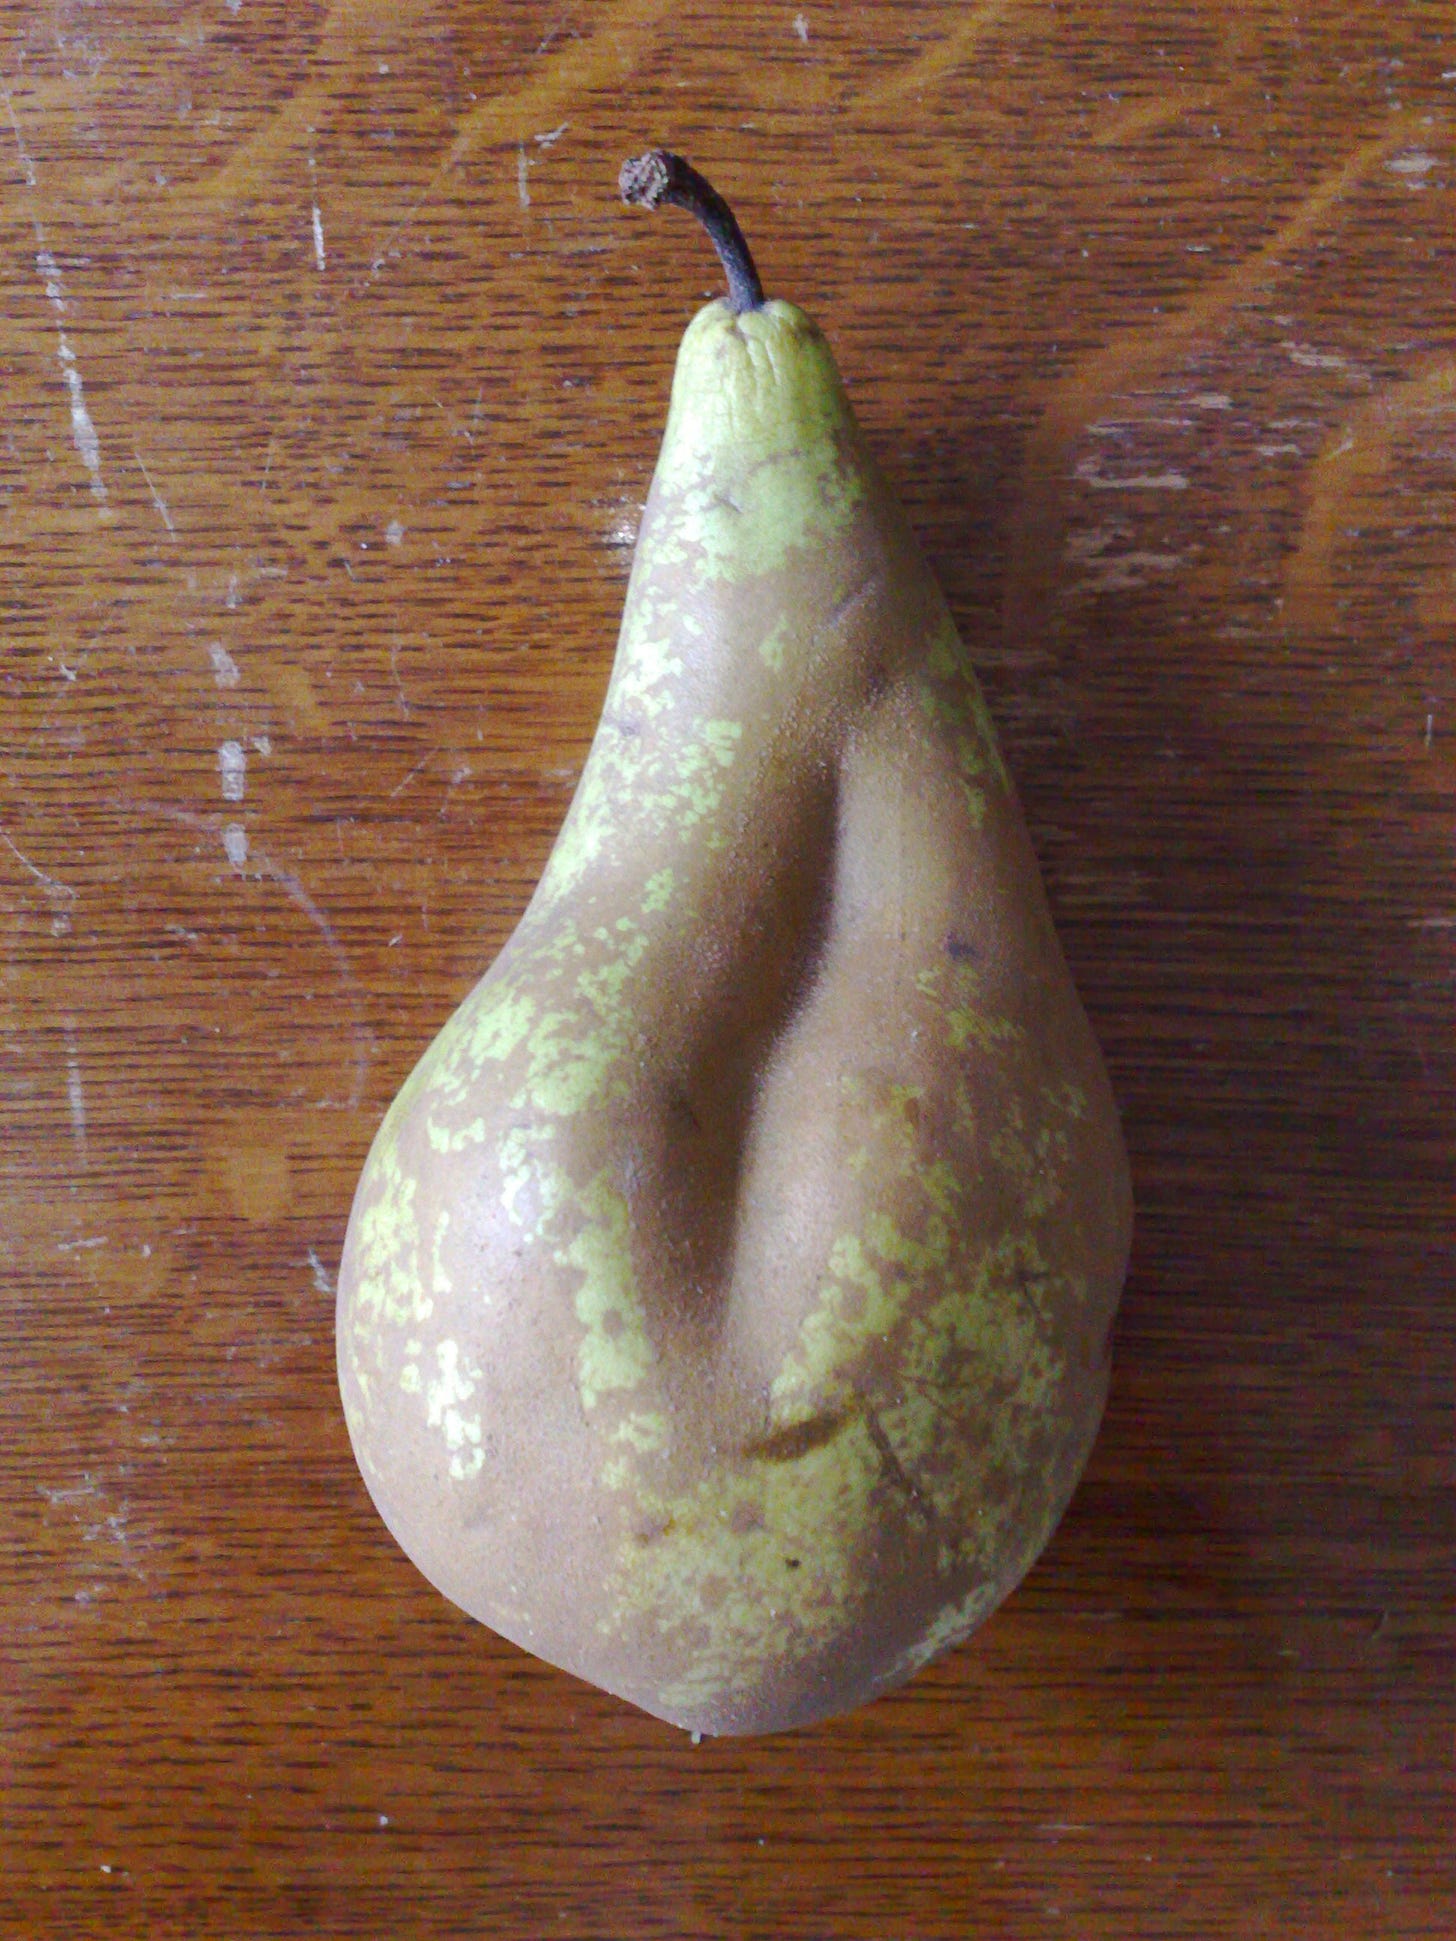 a sexy pear